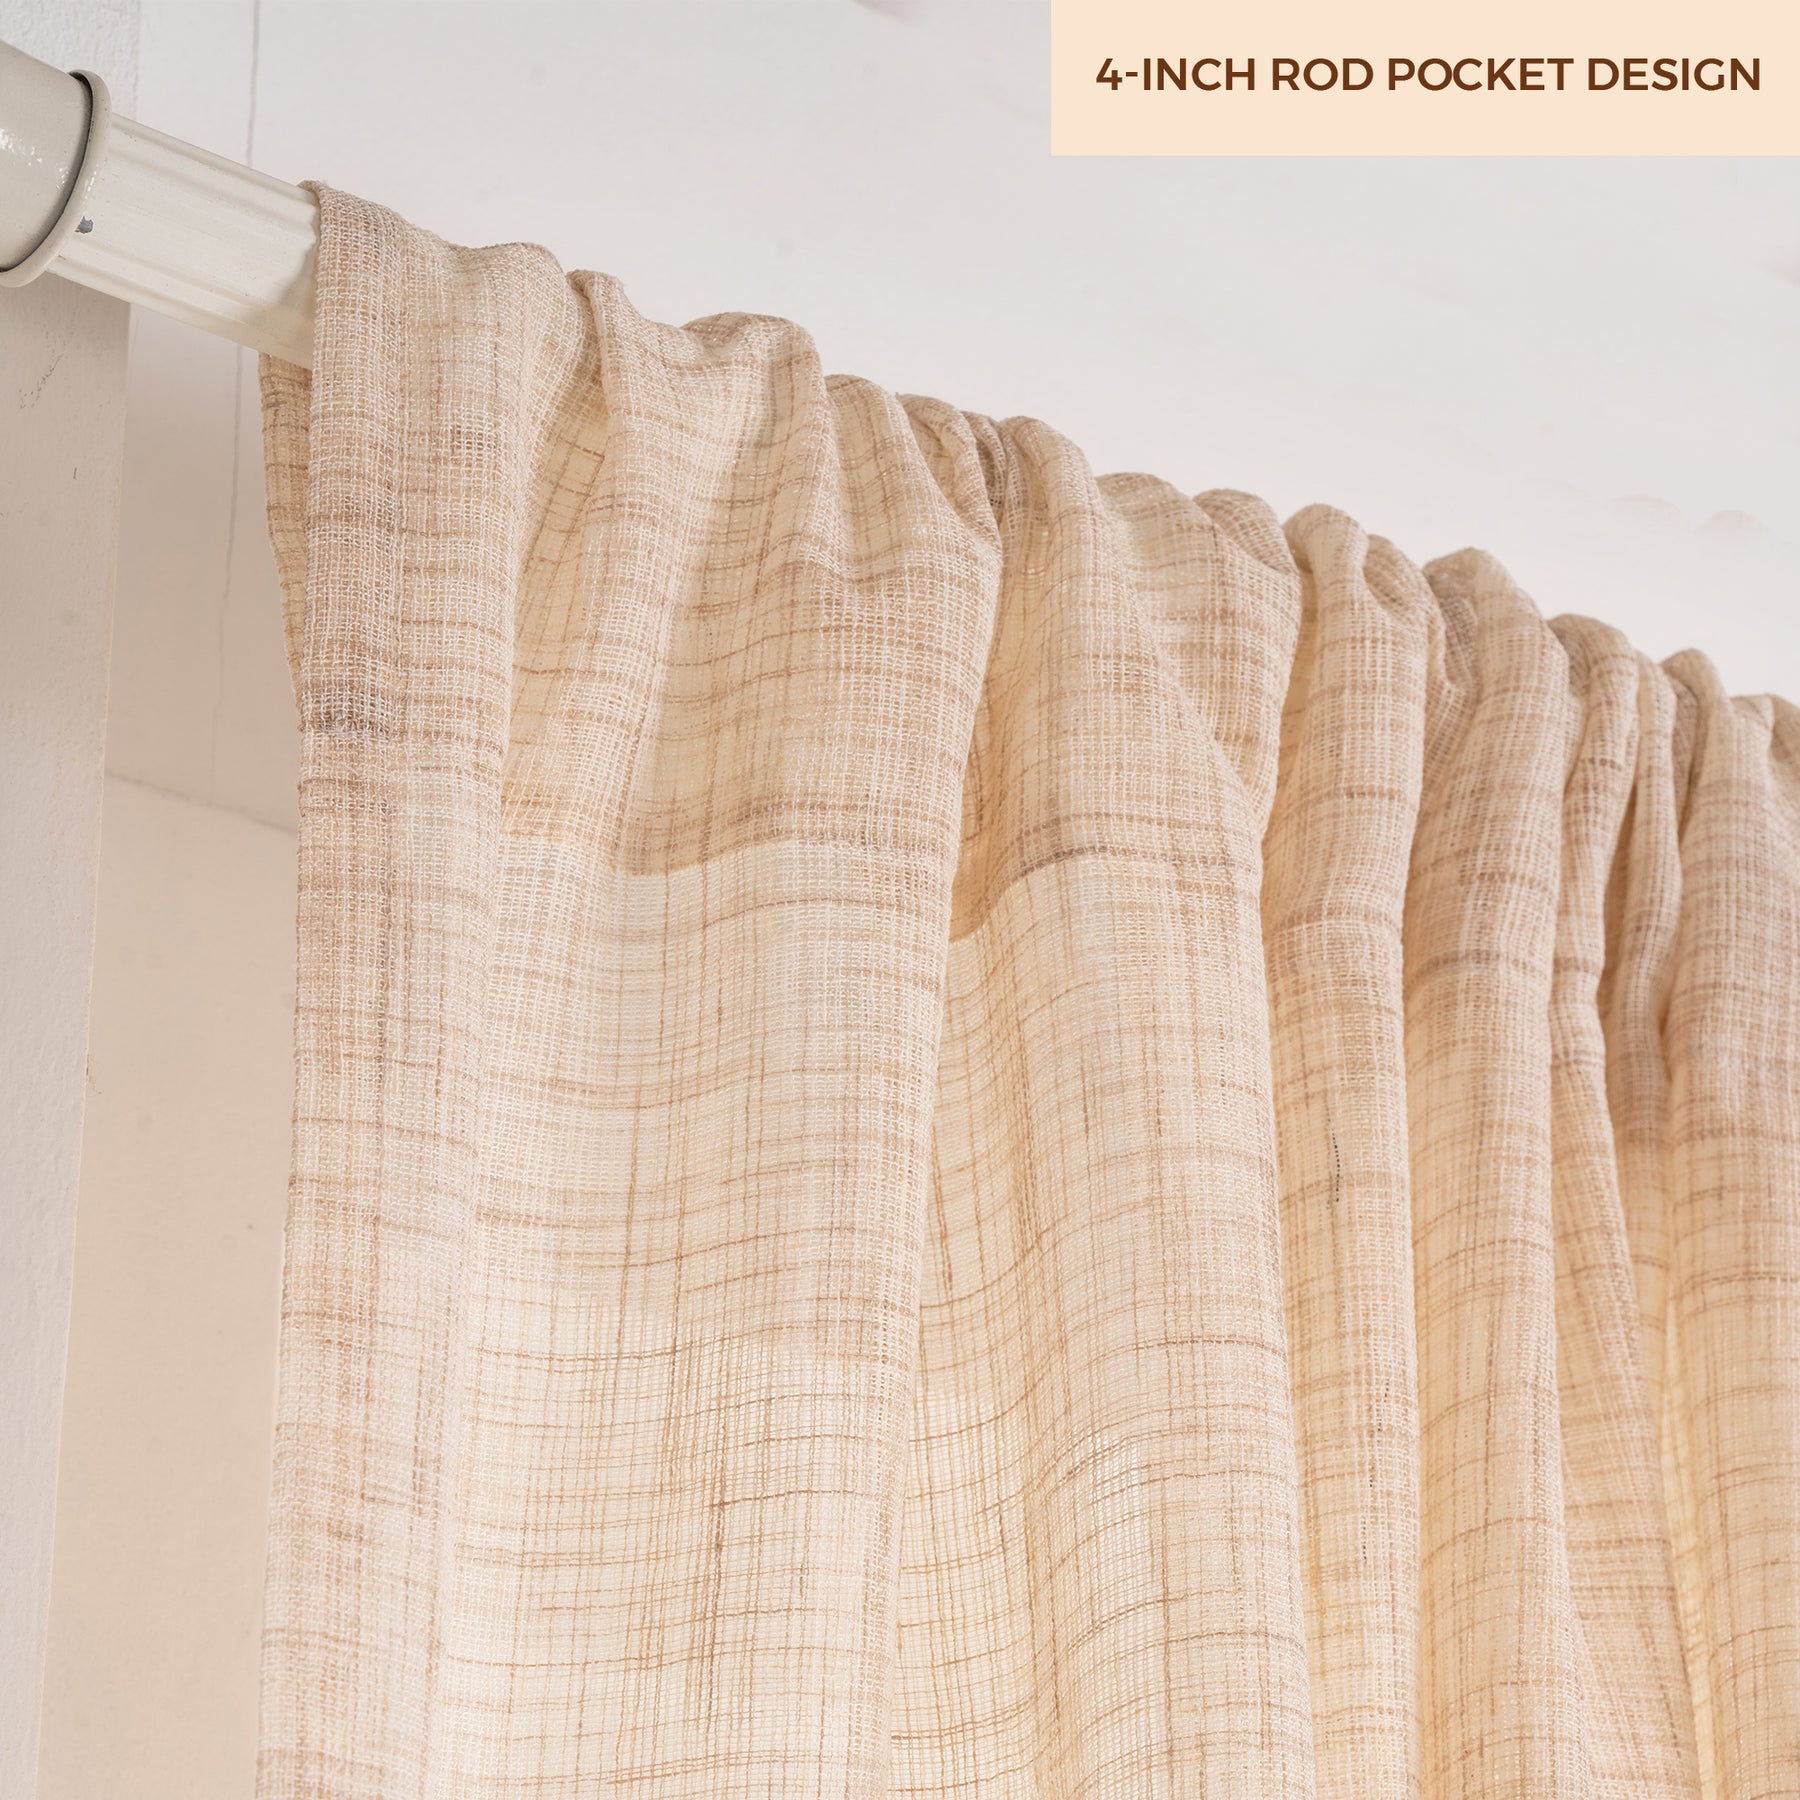 Beige and Cream Jute Textured Curtain | Set of 2 Panels